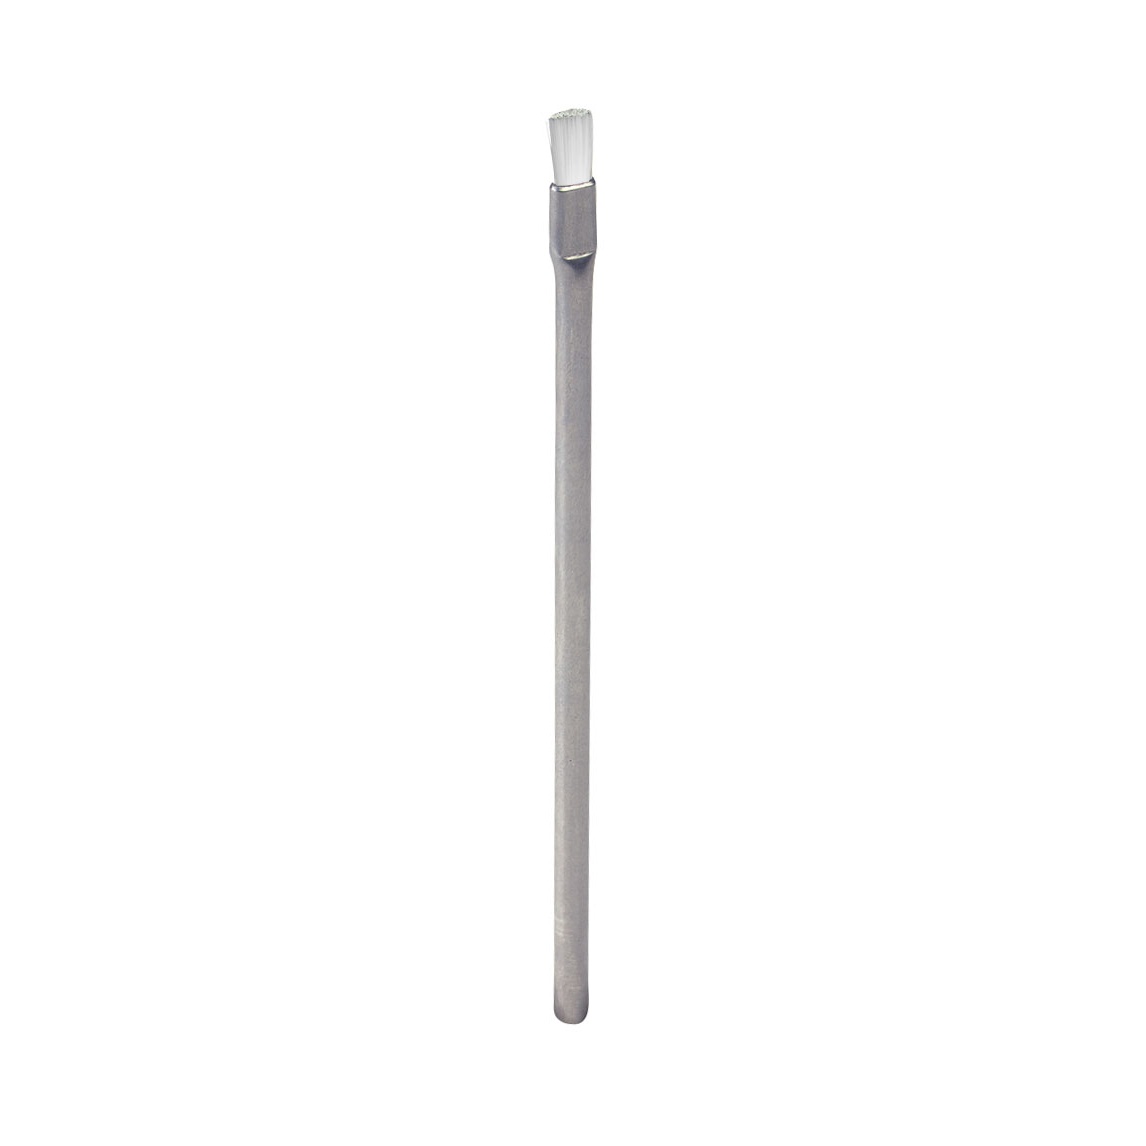 Applicator Brush — 0.008" Polypropylene Bristle / 3/16" Diameter Stainless Steel Tube Handle